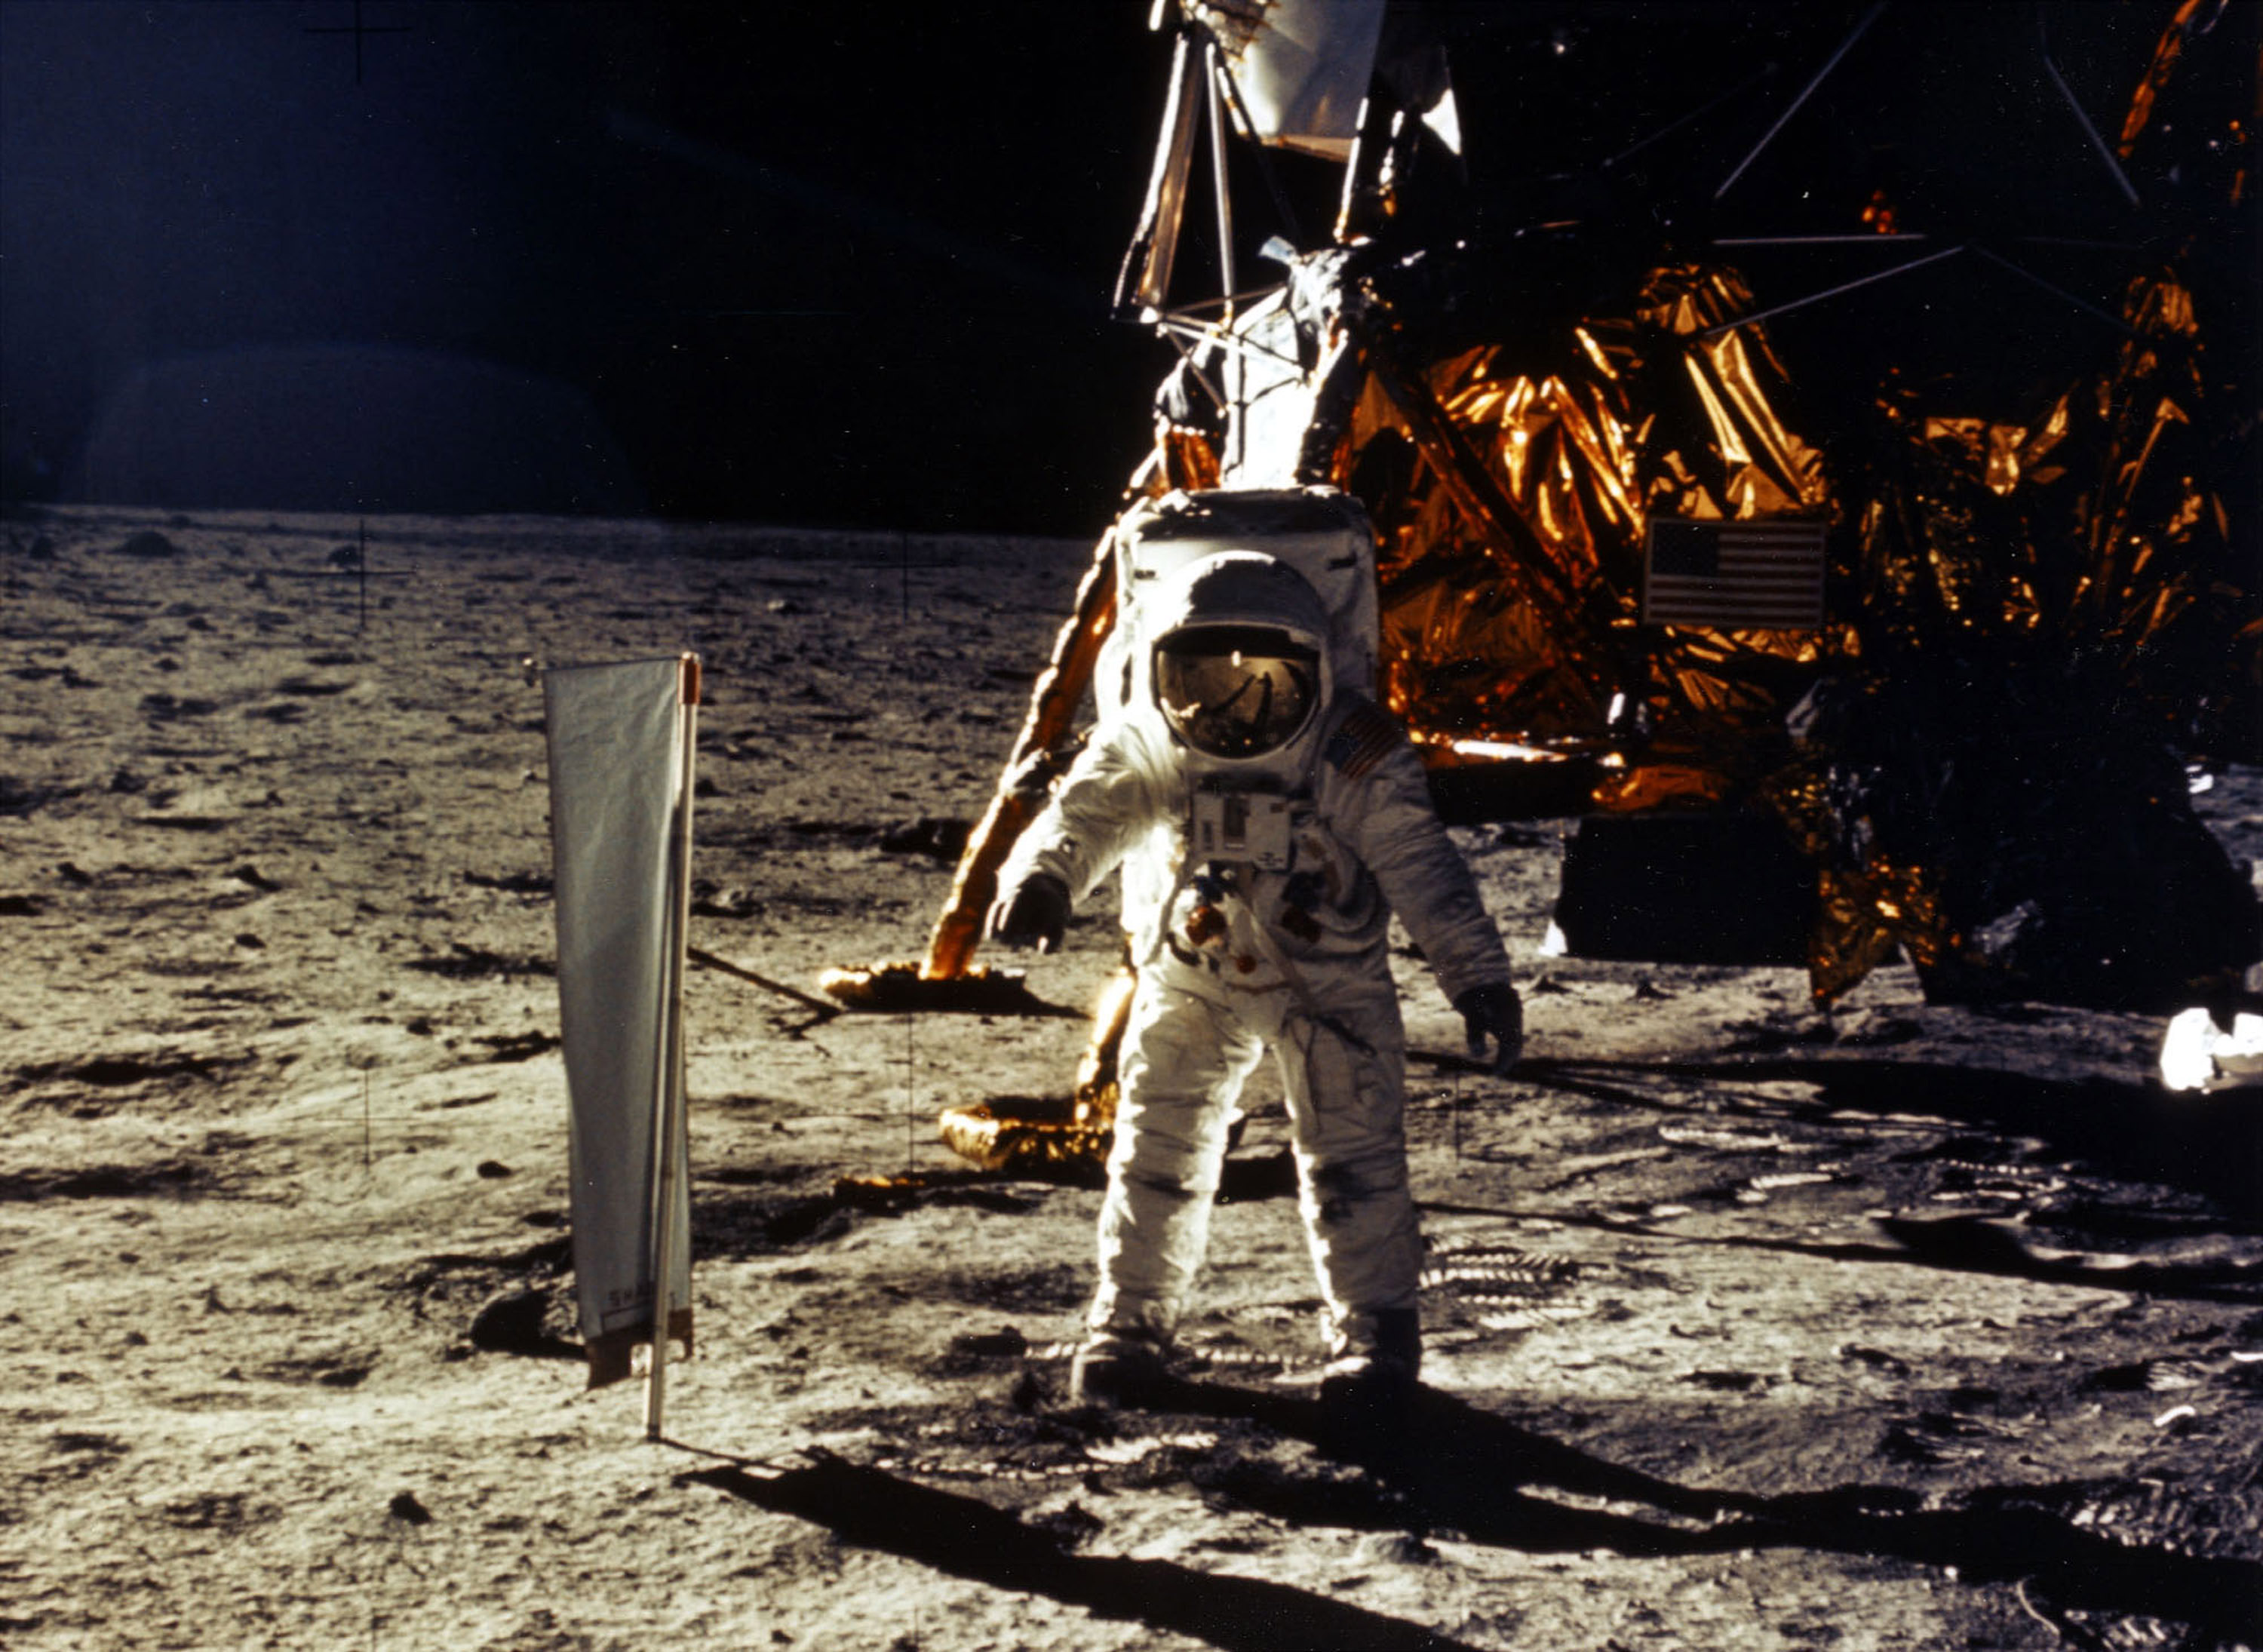 Apollo 11 1969. Walking on the moon